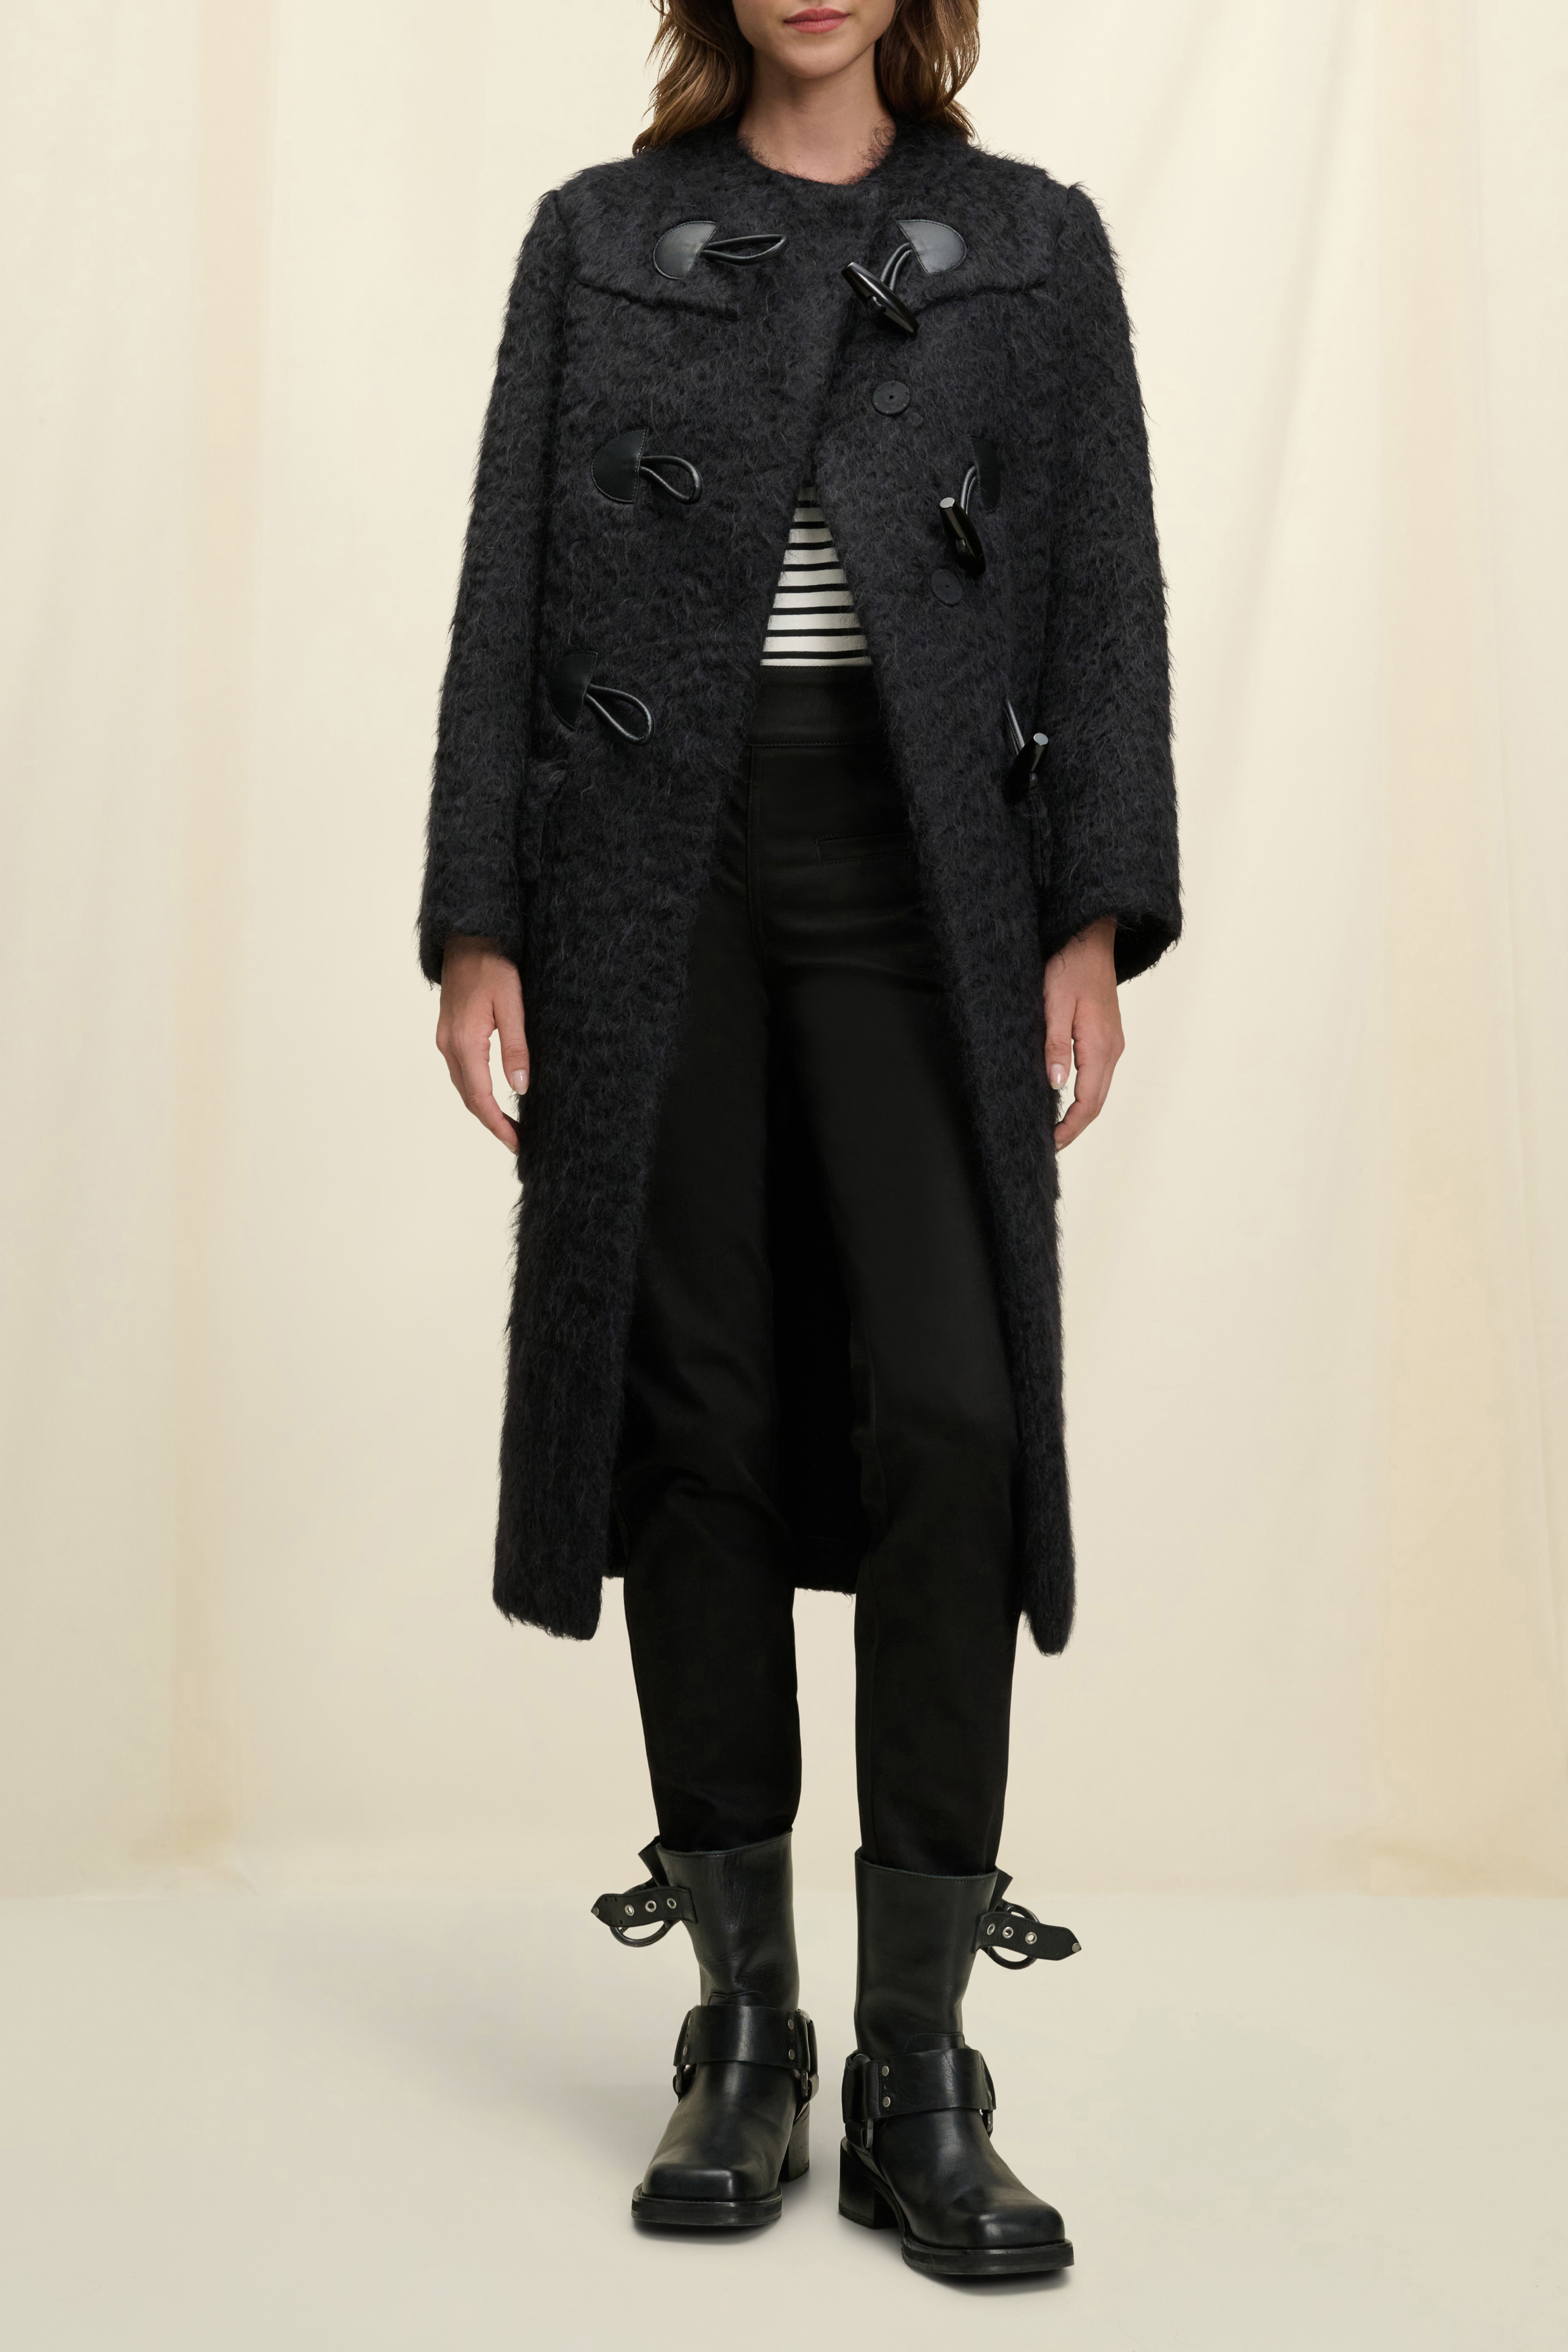 Jackets & Coats Sale | DOROTHEE SCHUMACHER - Official Online Store